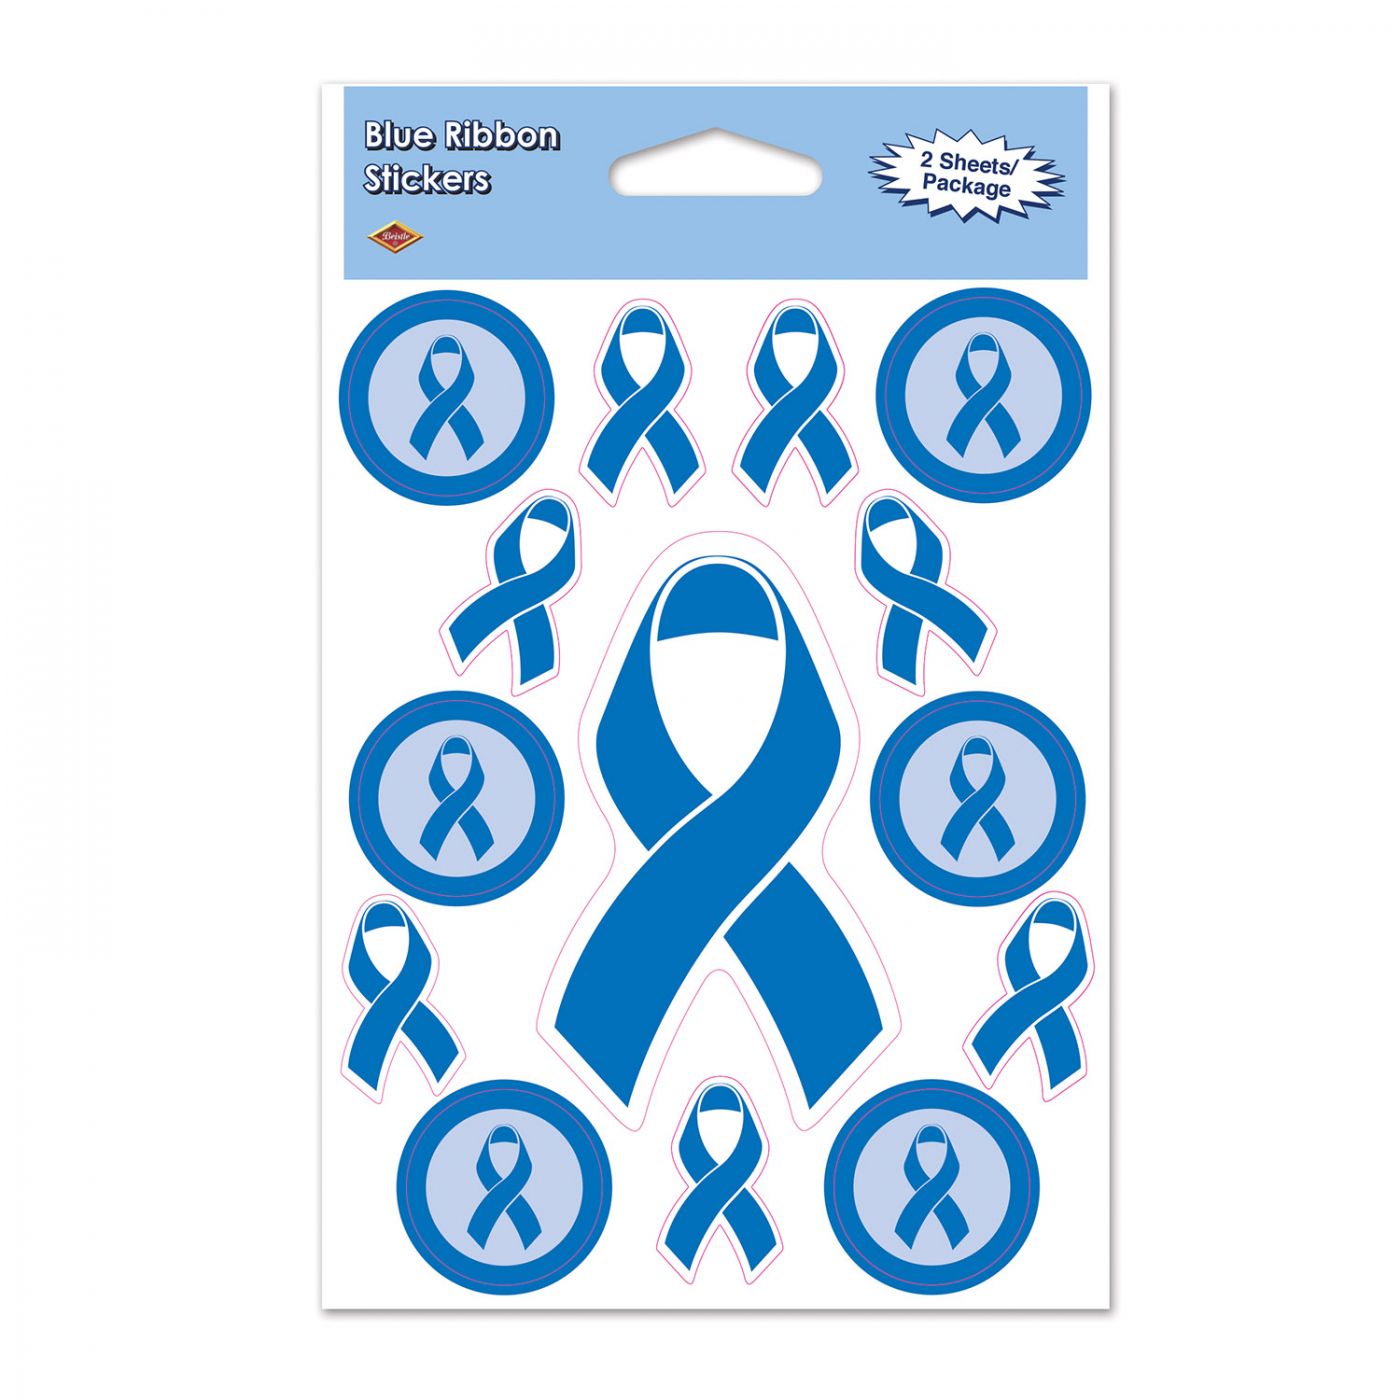 Blue Ribbon Stickers (12) image